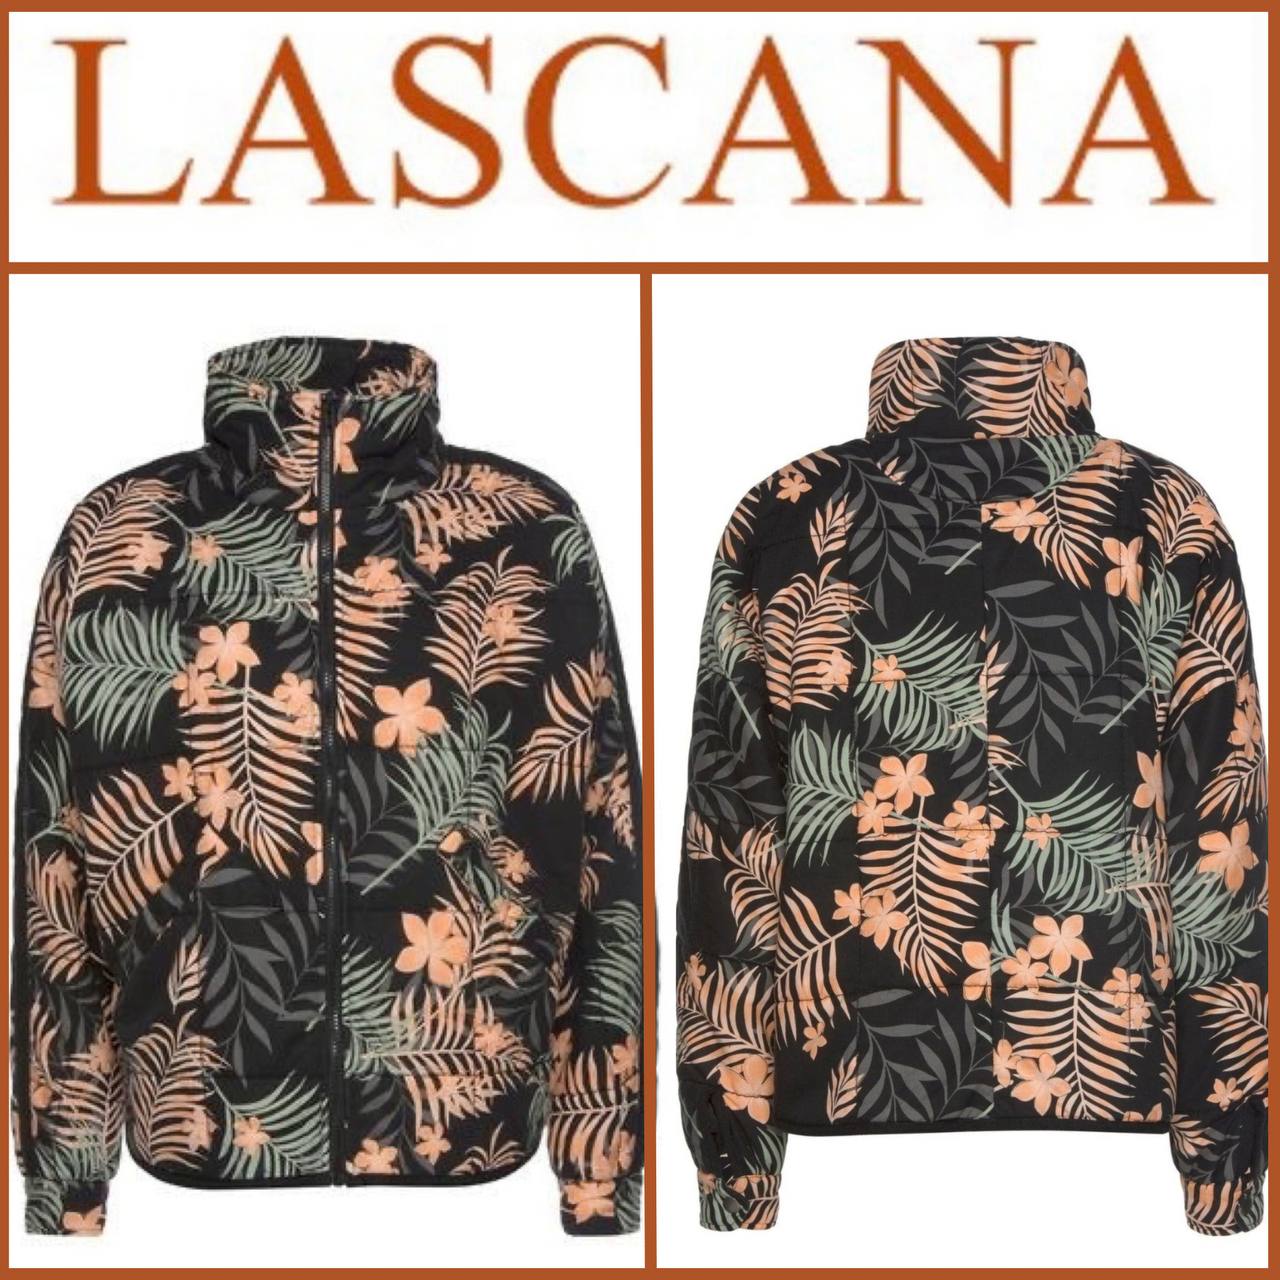 Women's jackets from Lascana